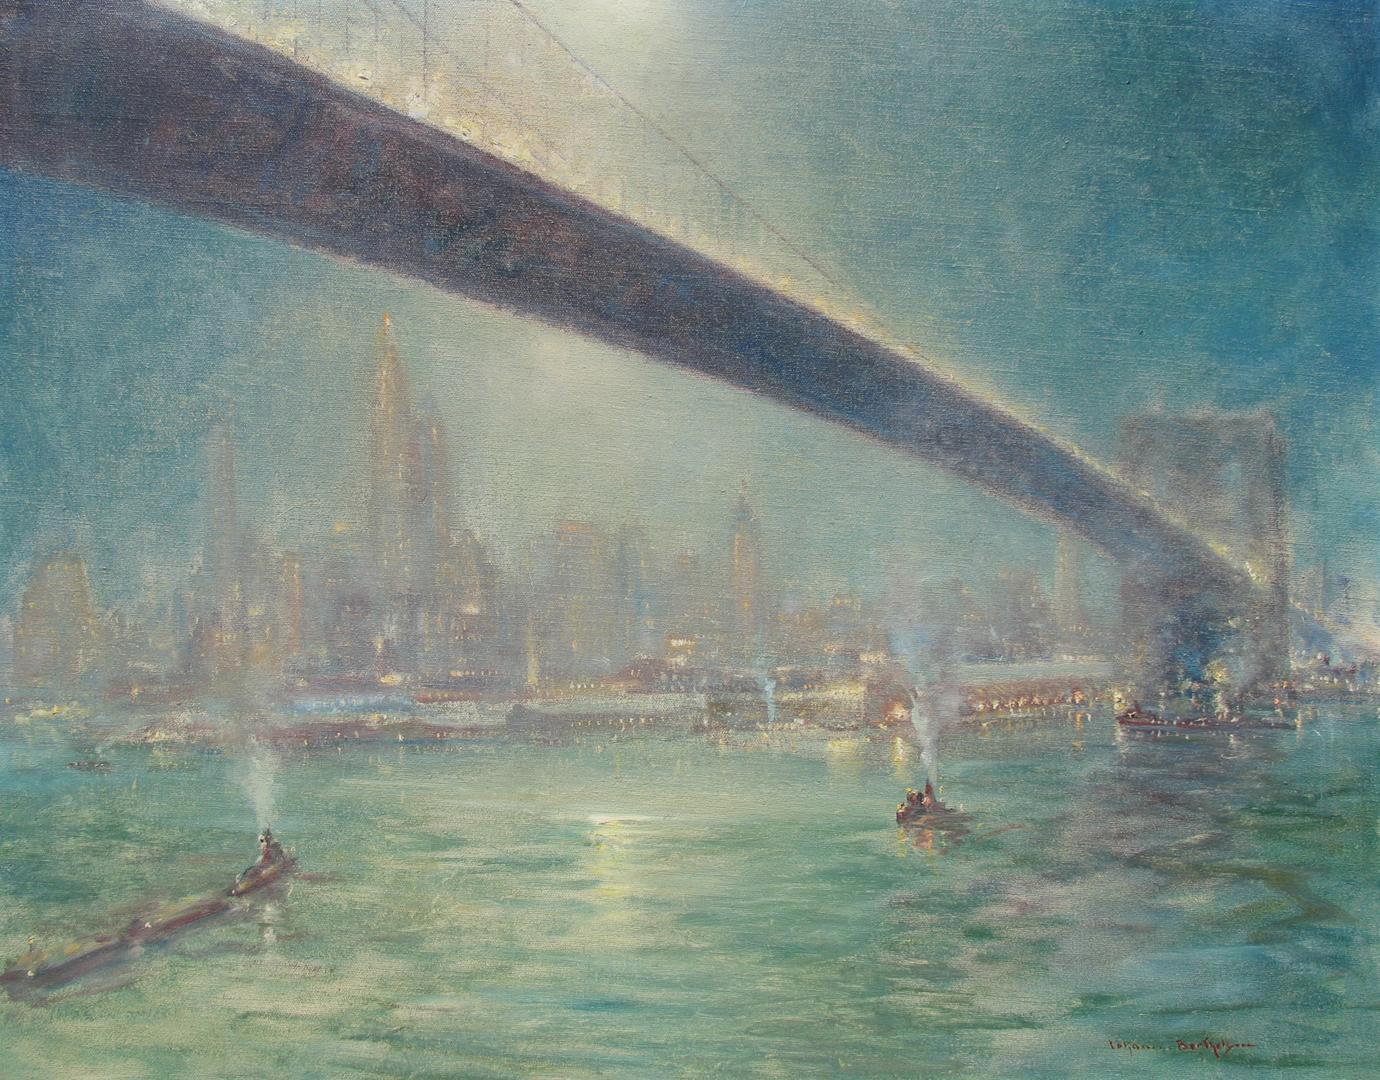 One of Johann Berthelsen's iconic nocturne views of New York City across the Hudson River. 

Bridge Nocturne (c.1945)
Oil on canvas, 22